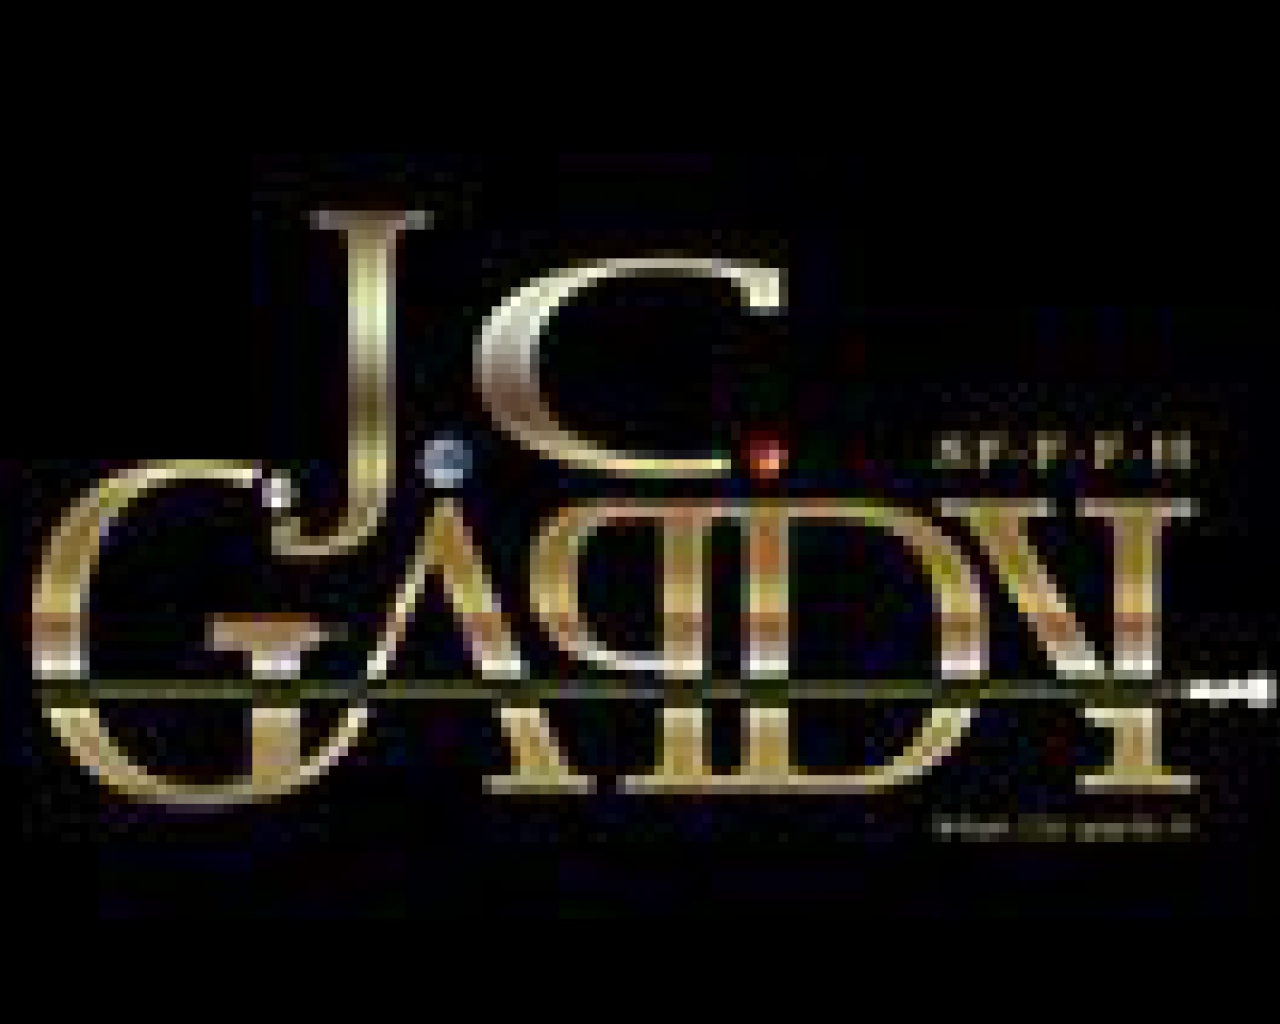 J.C. Gapdy